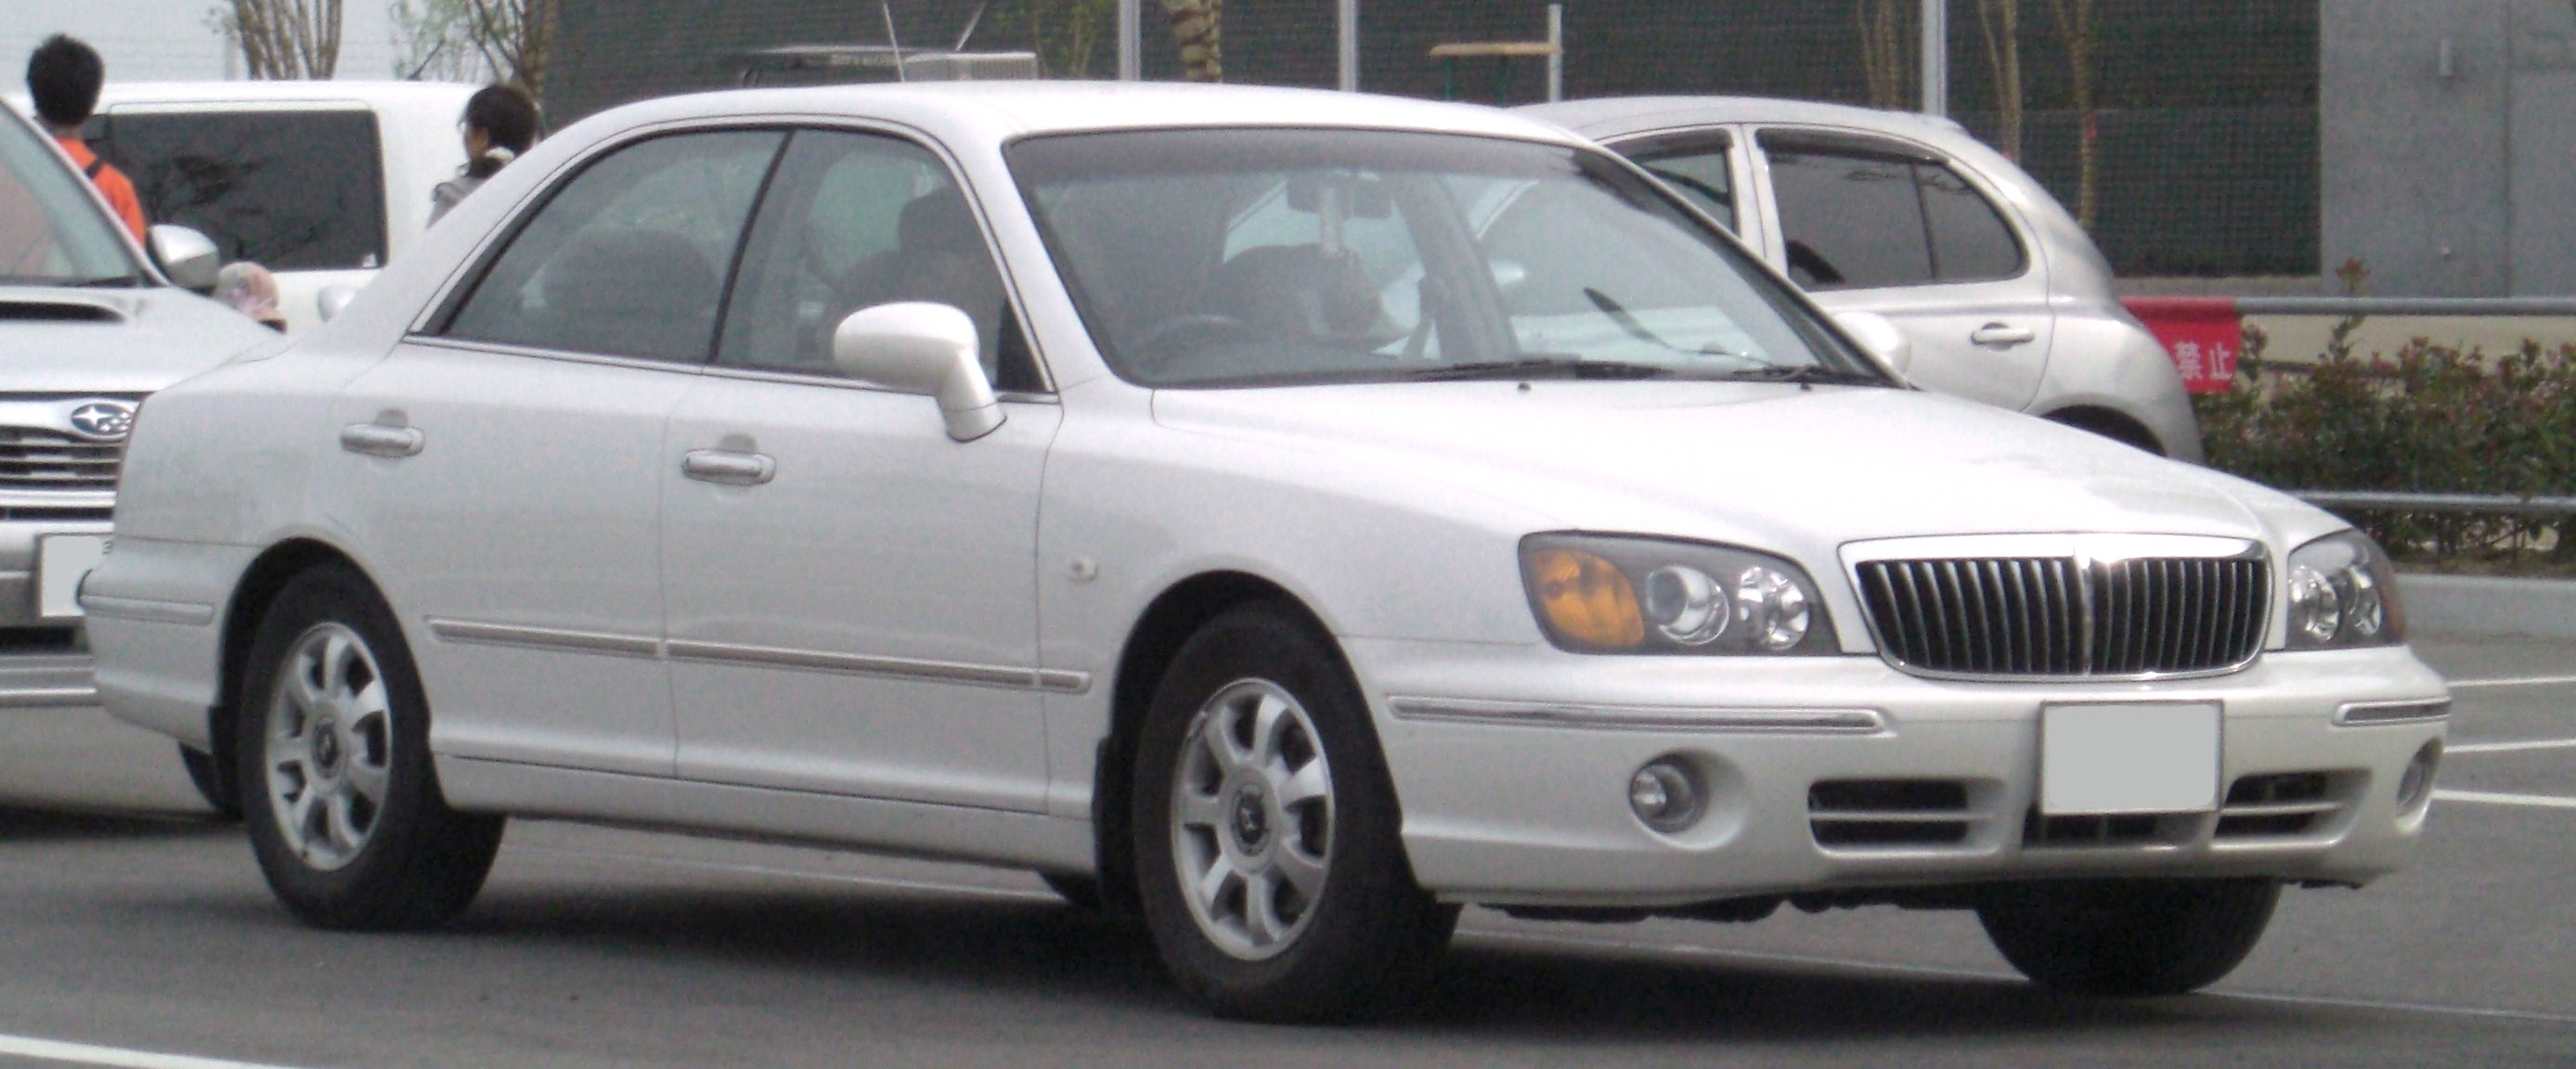 File:Hyundai XG300.jpg - Wikimedia Commons